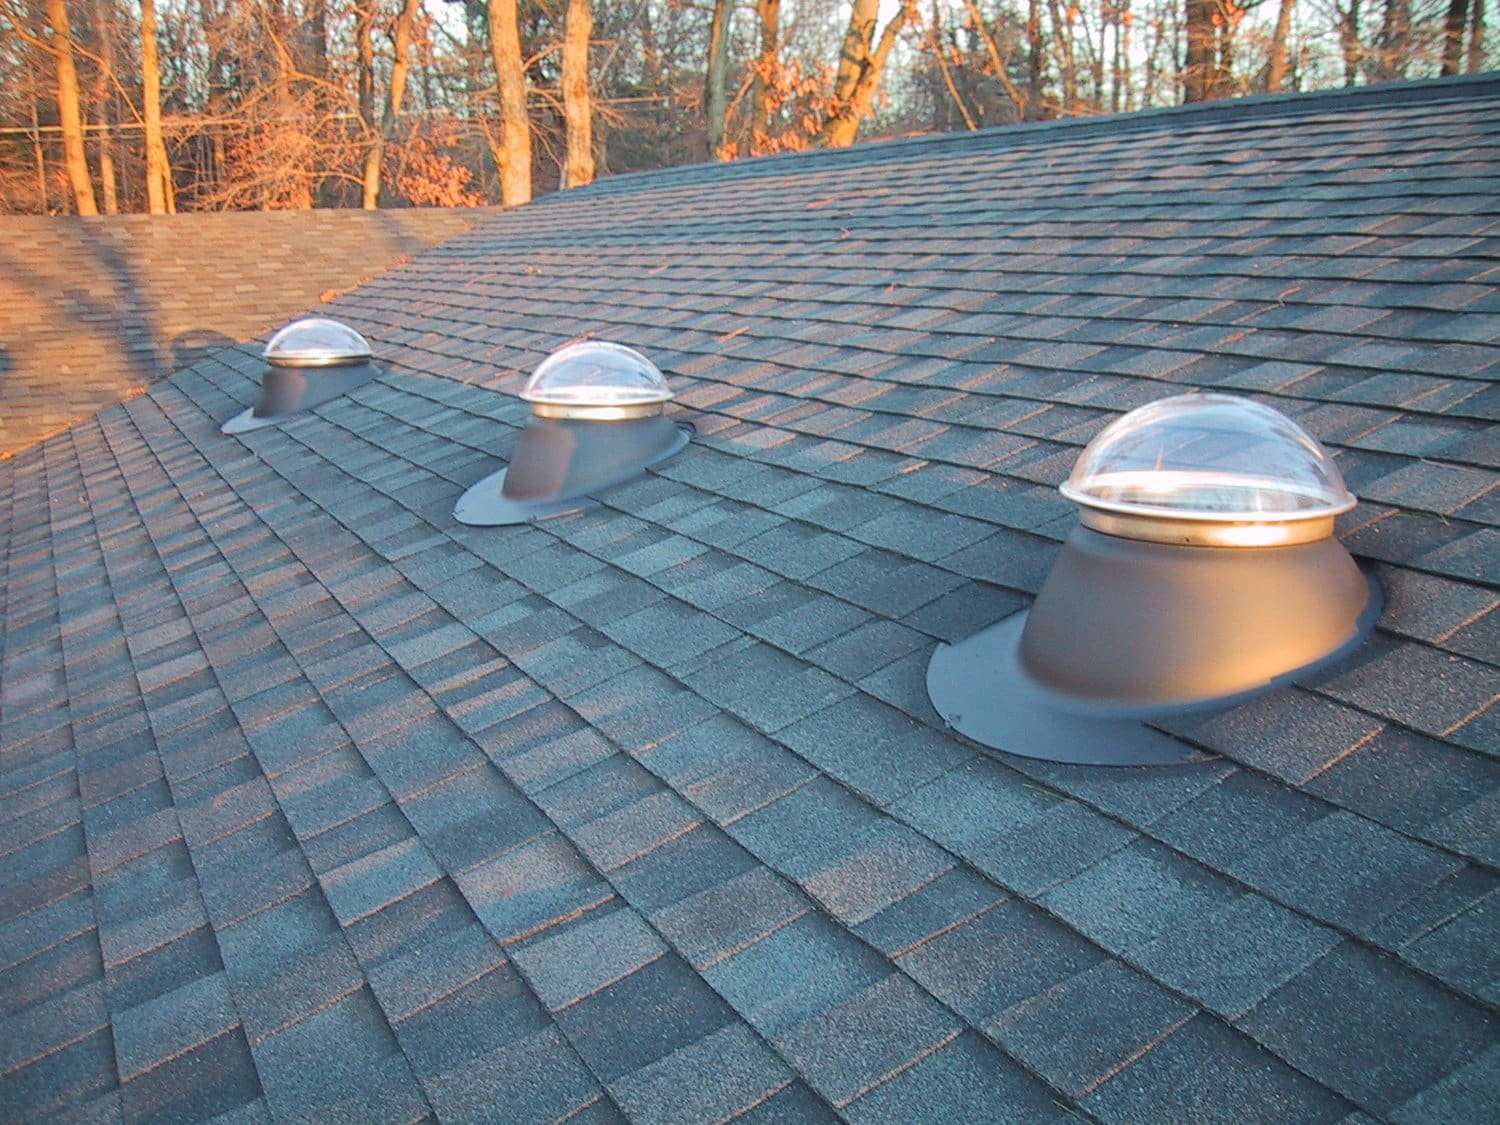 Tubular skylights on dark shingle roof